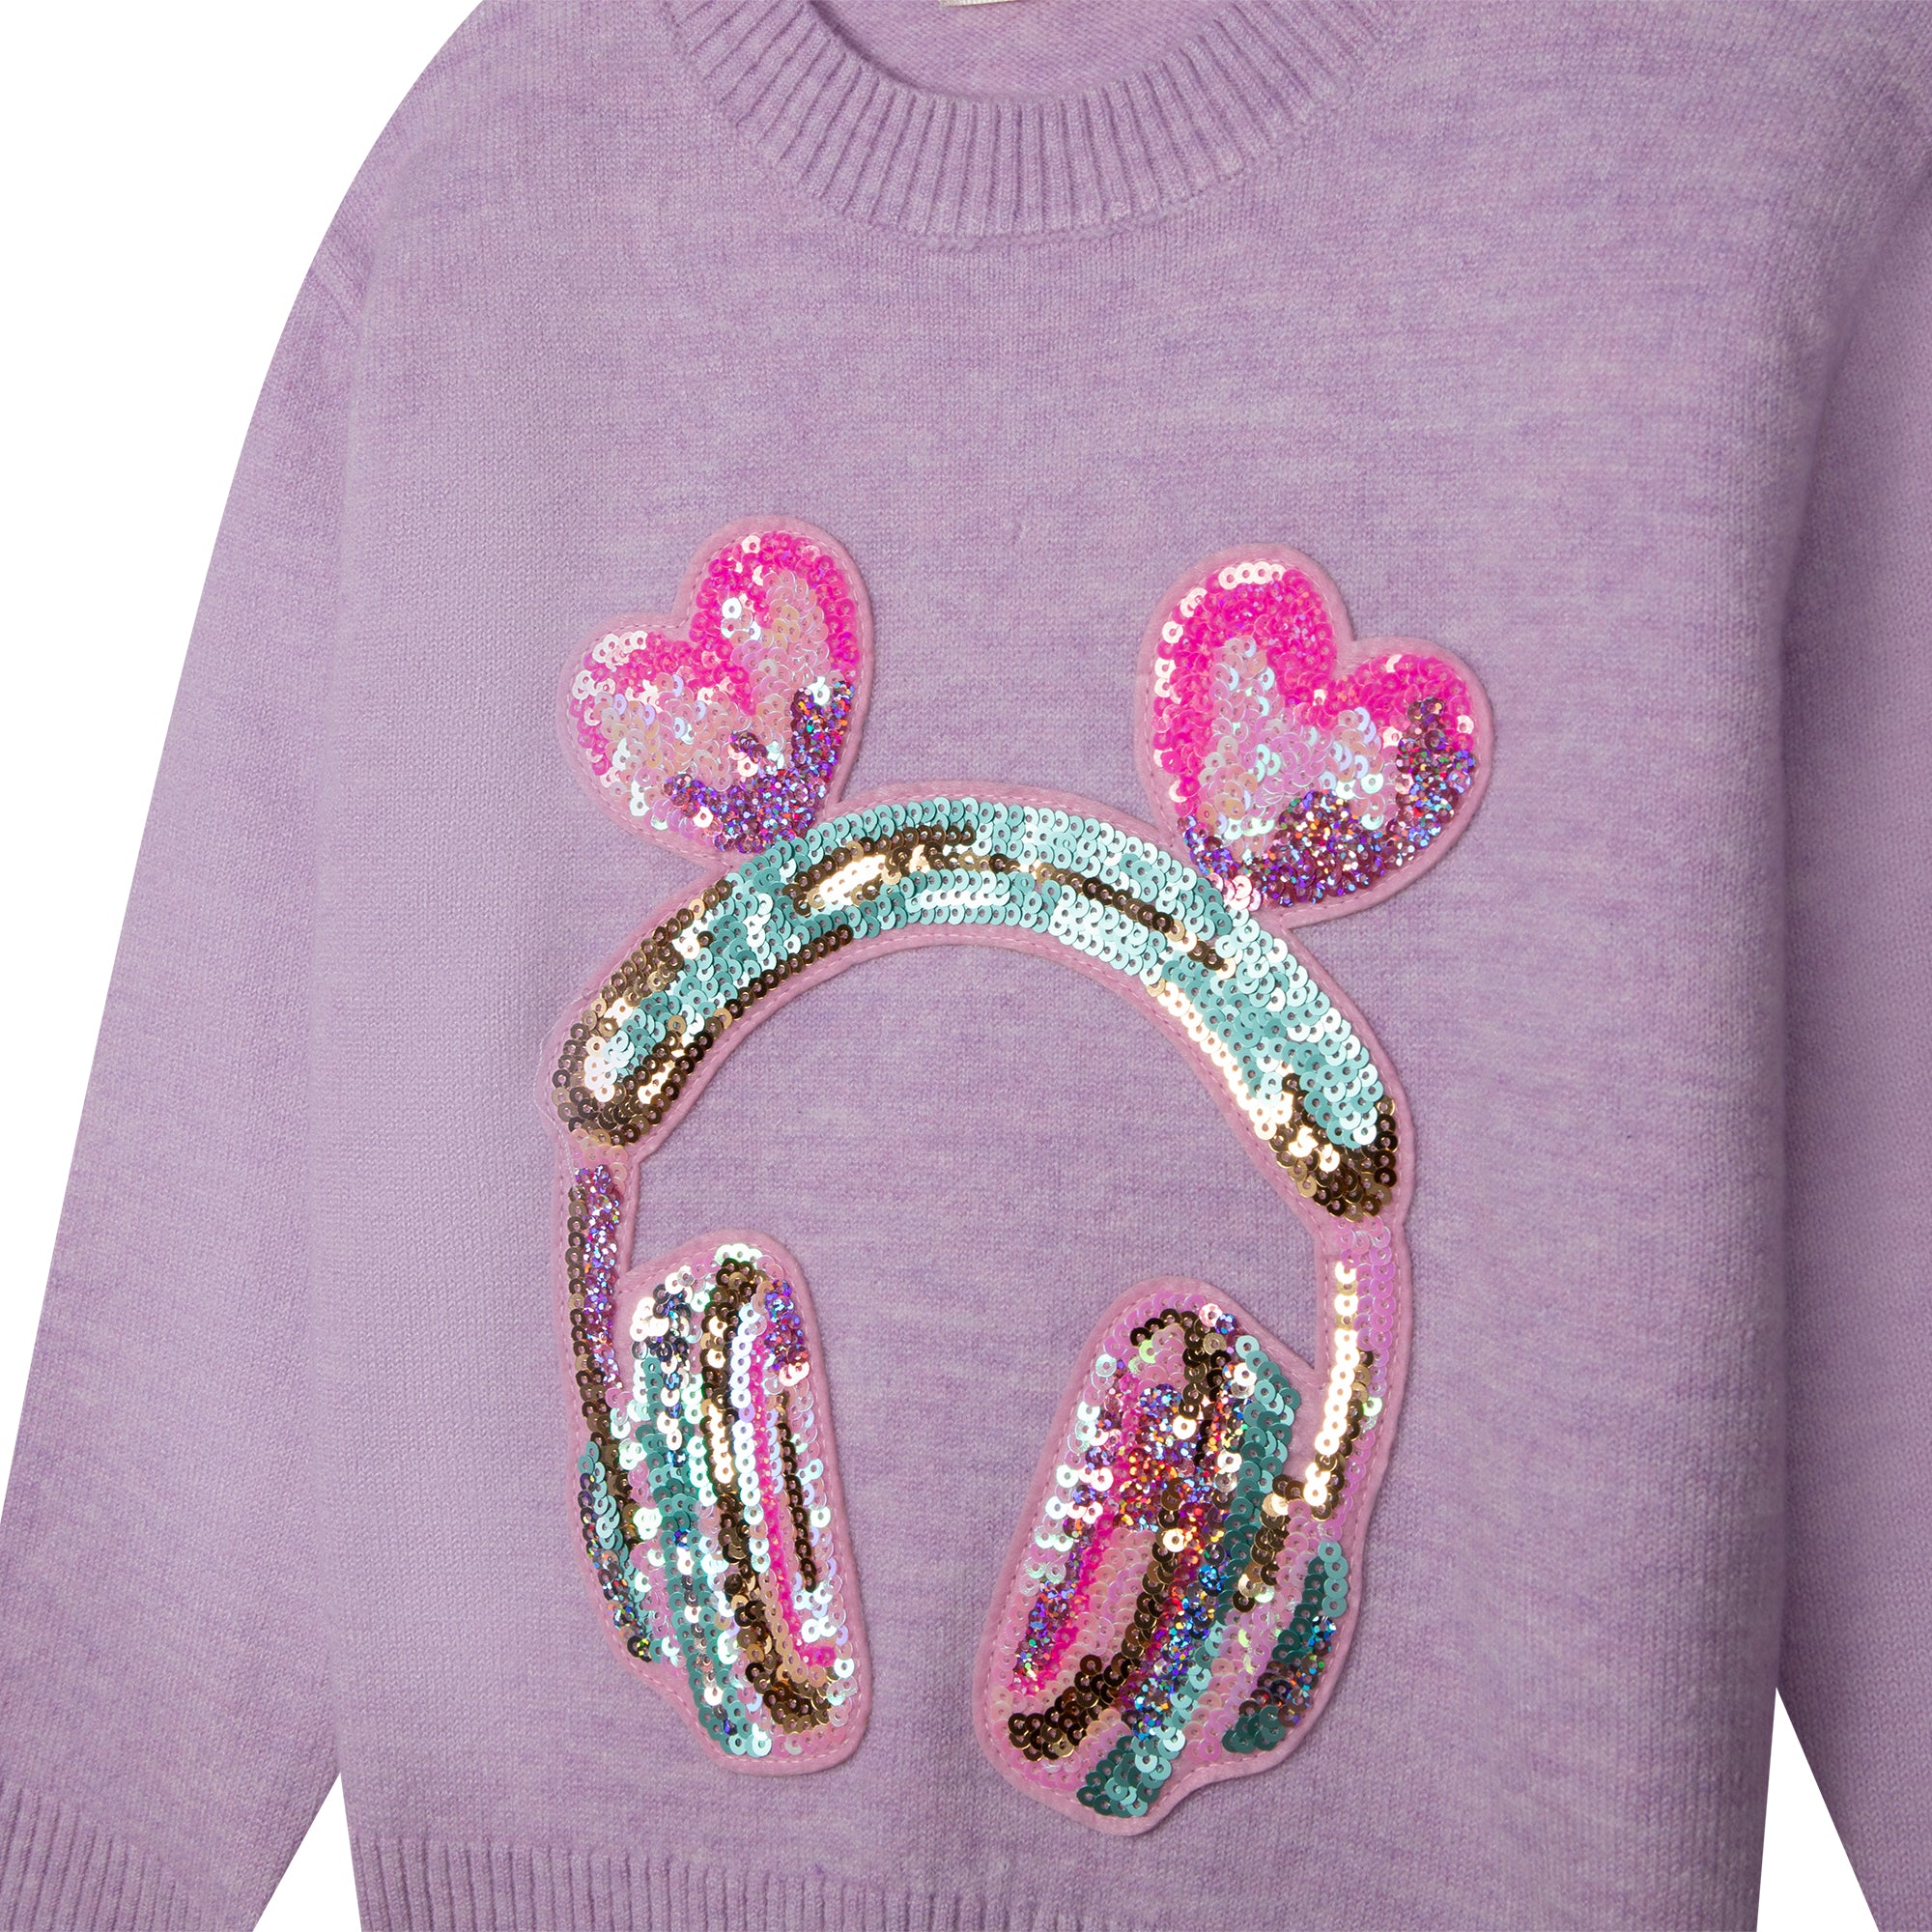 Girls Purple Sequin Sweater